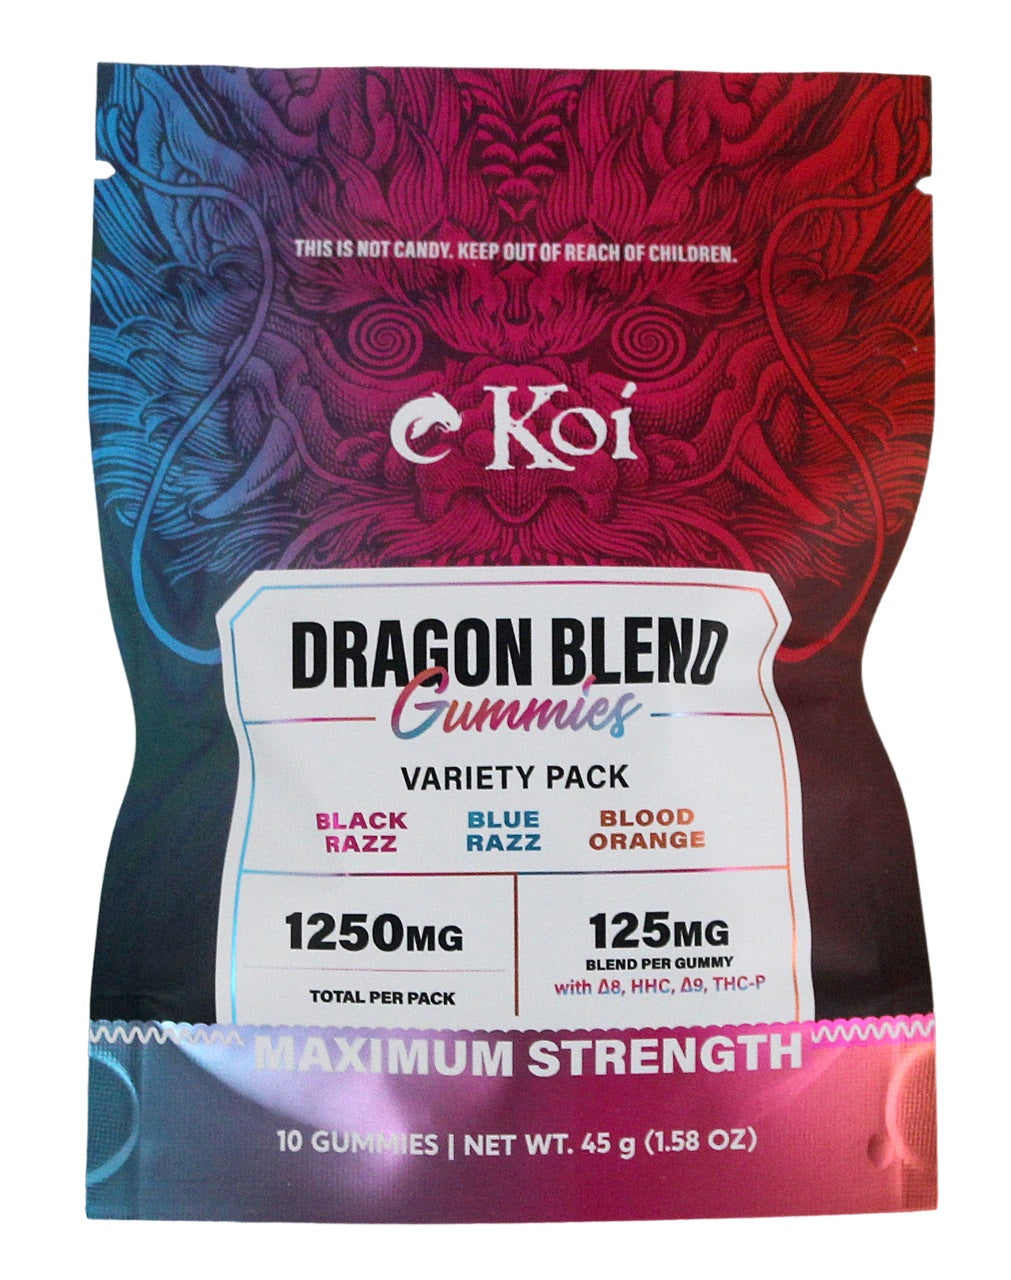 Koi Variety Pack Gummies 12pk - Dragon Blend